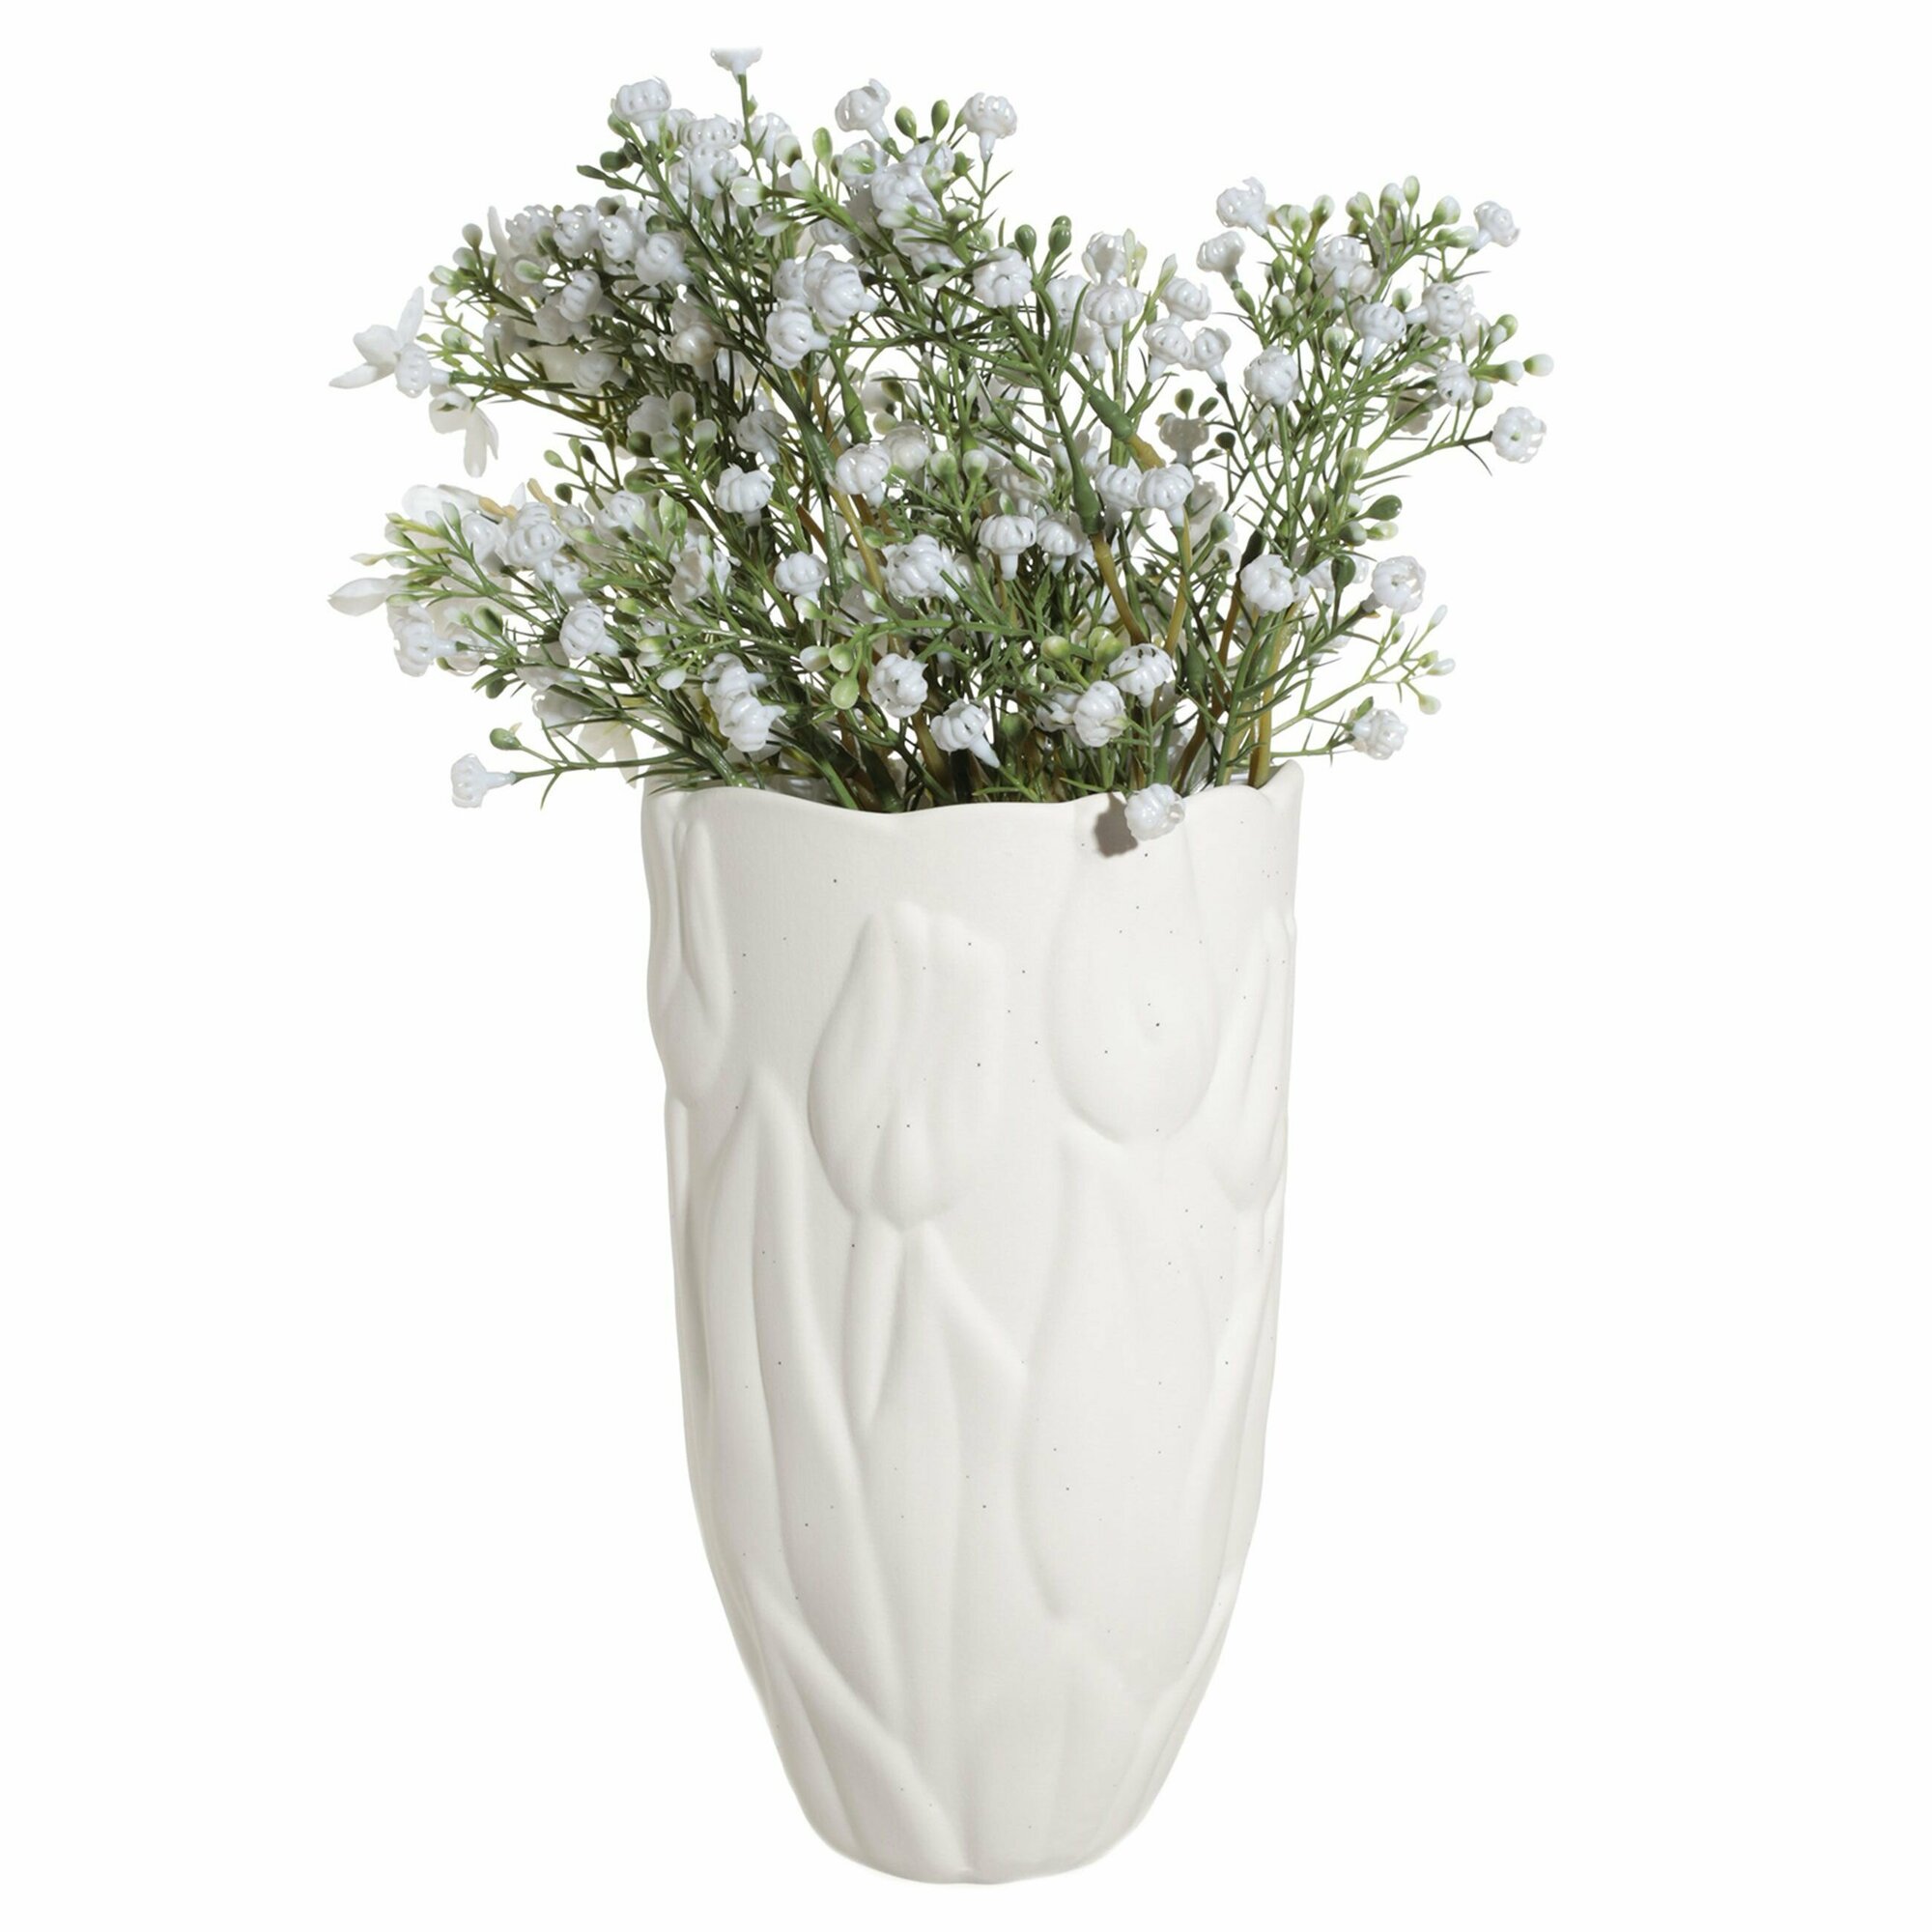 Ваза для цветов, 20 см, декоративная, фарфор P, белая, в крапинку, Тюльпаны, Tulip